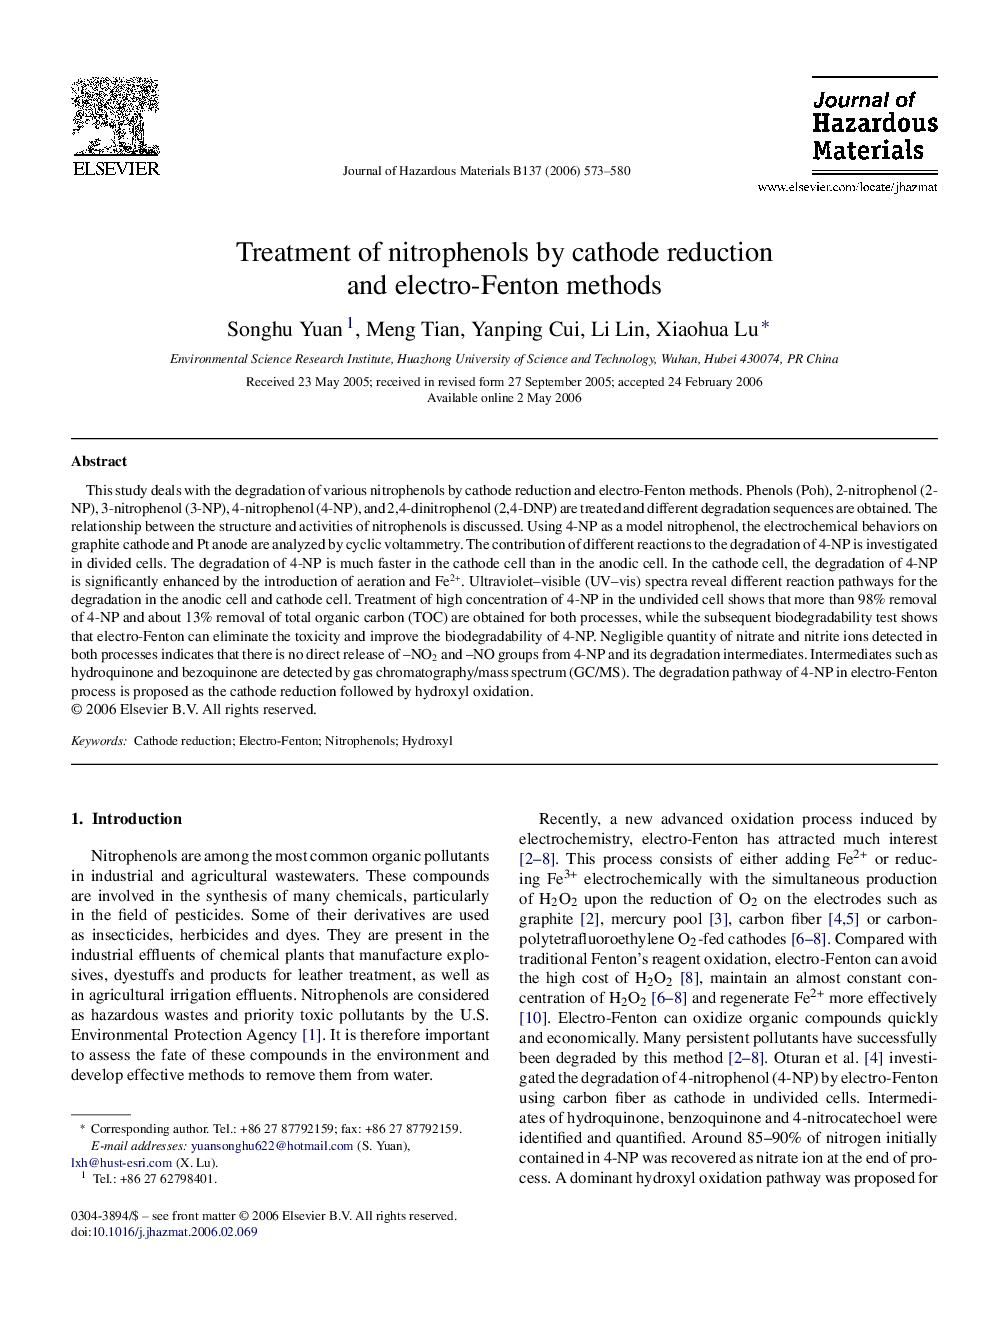 Treatment of nitrophenols by cathode reduction and electro-Fenton methods